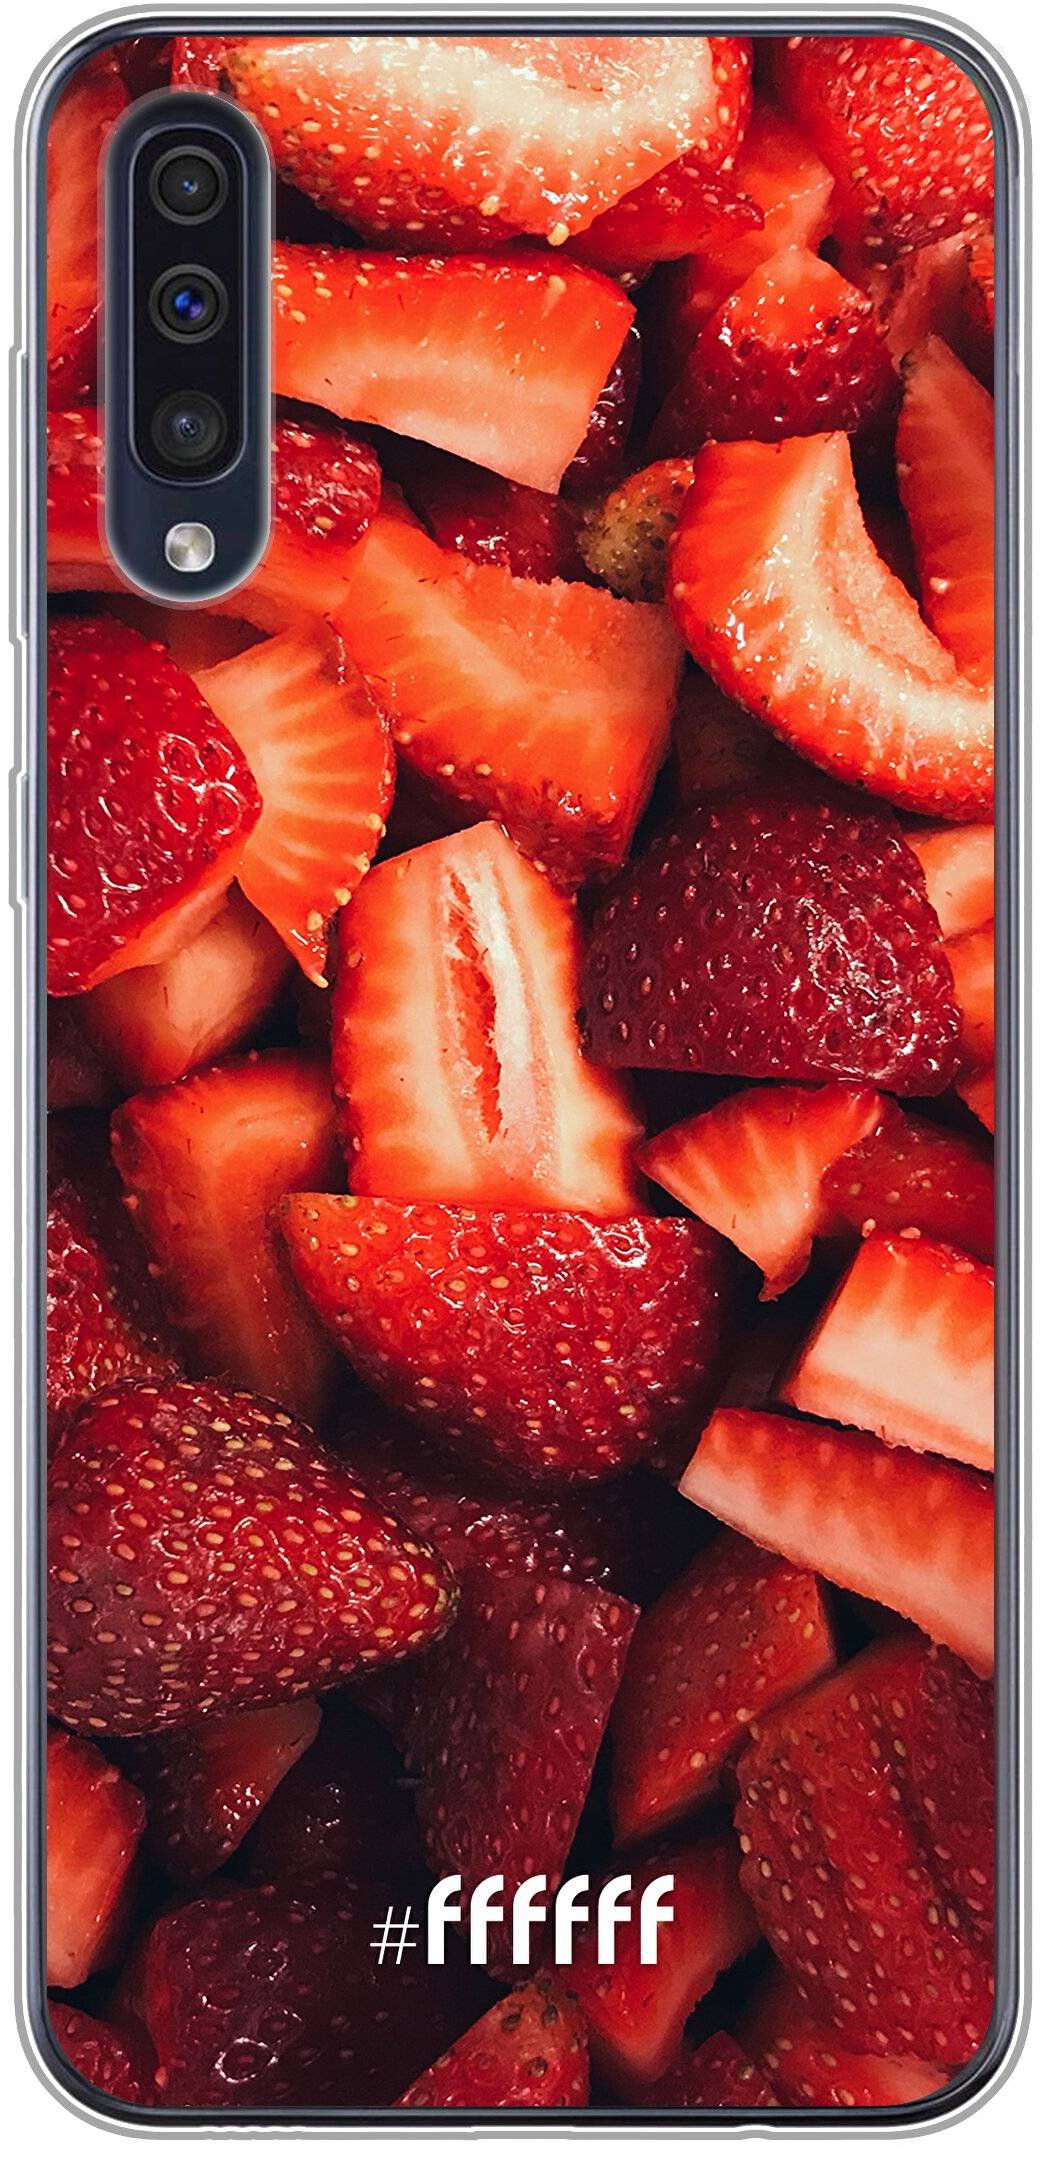 Strawberry Fields Galaxy A40